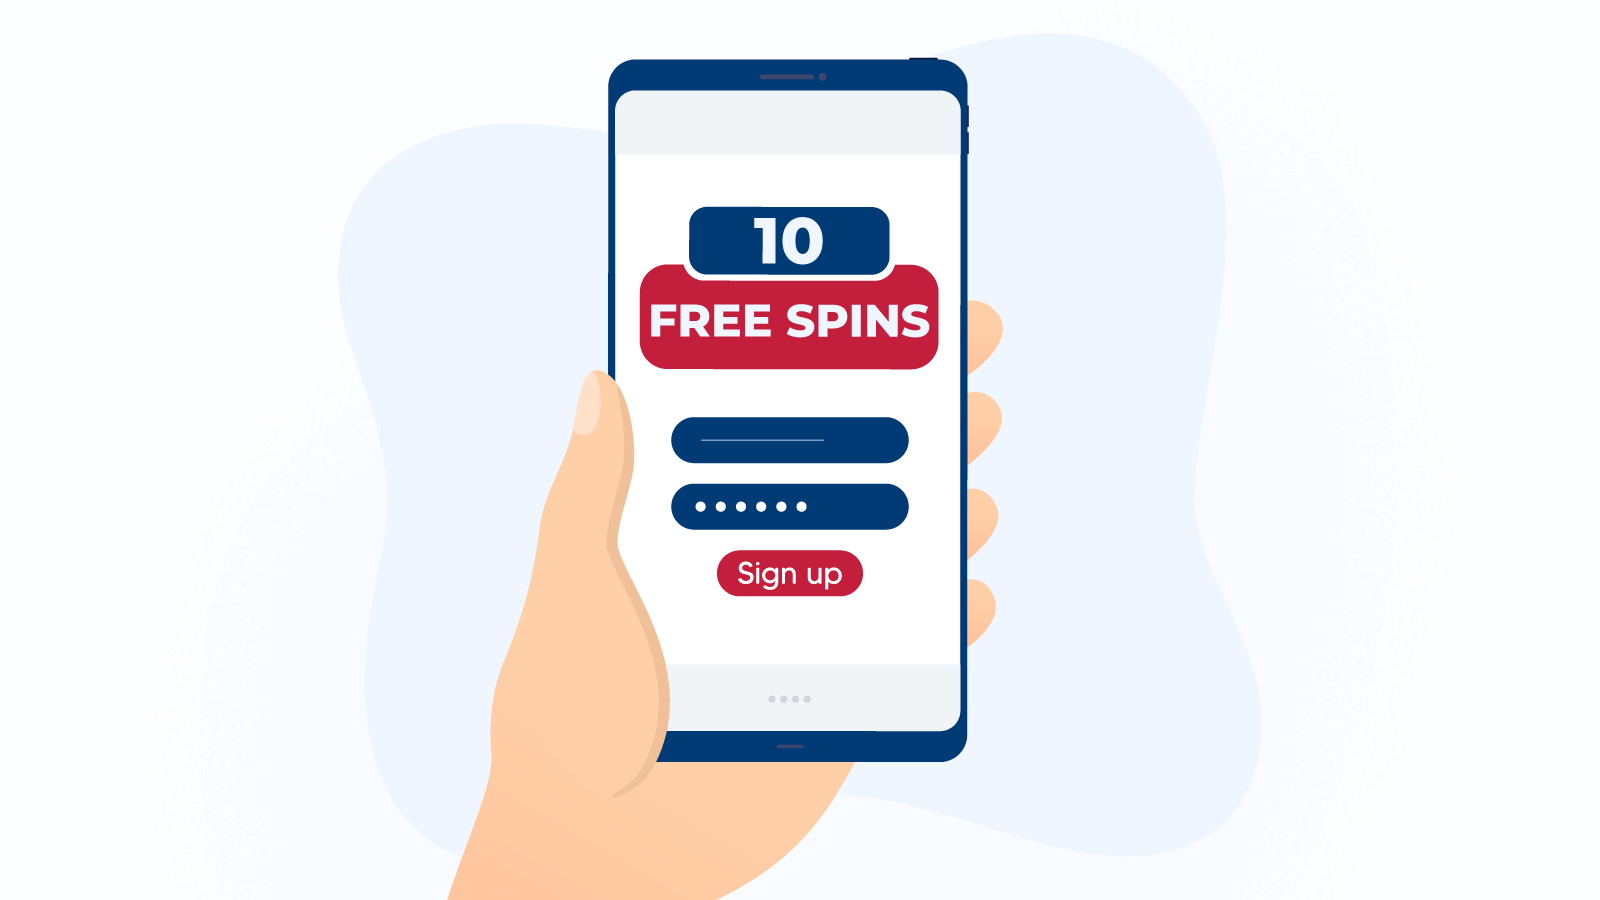 Registration 10 Free Spins on Slots